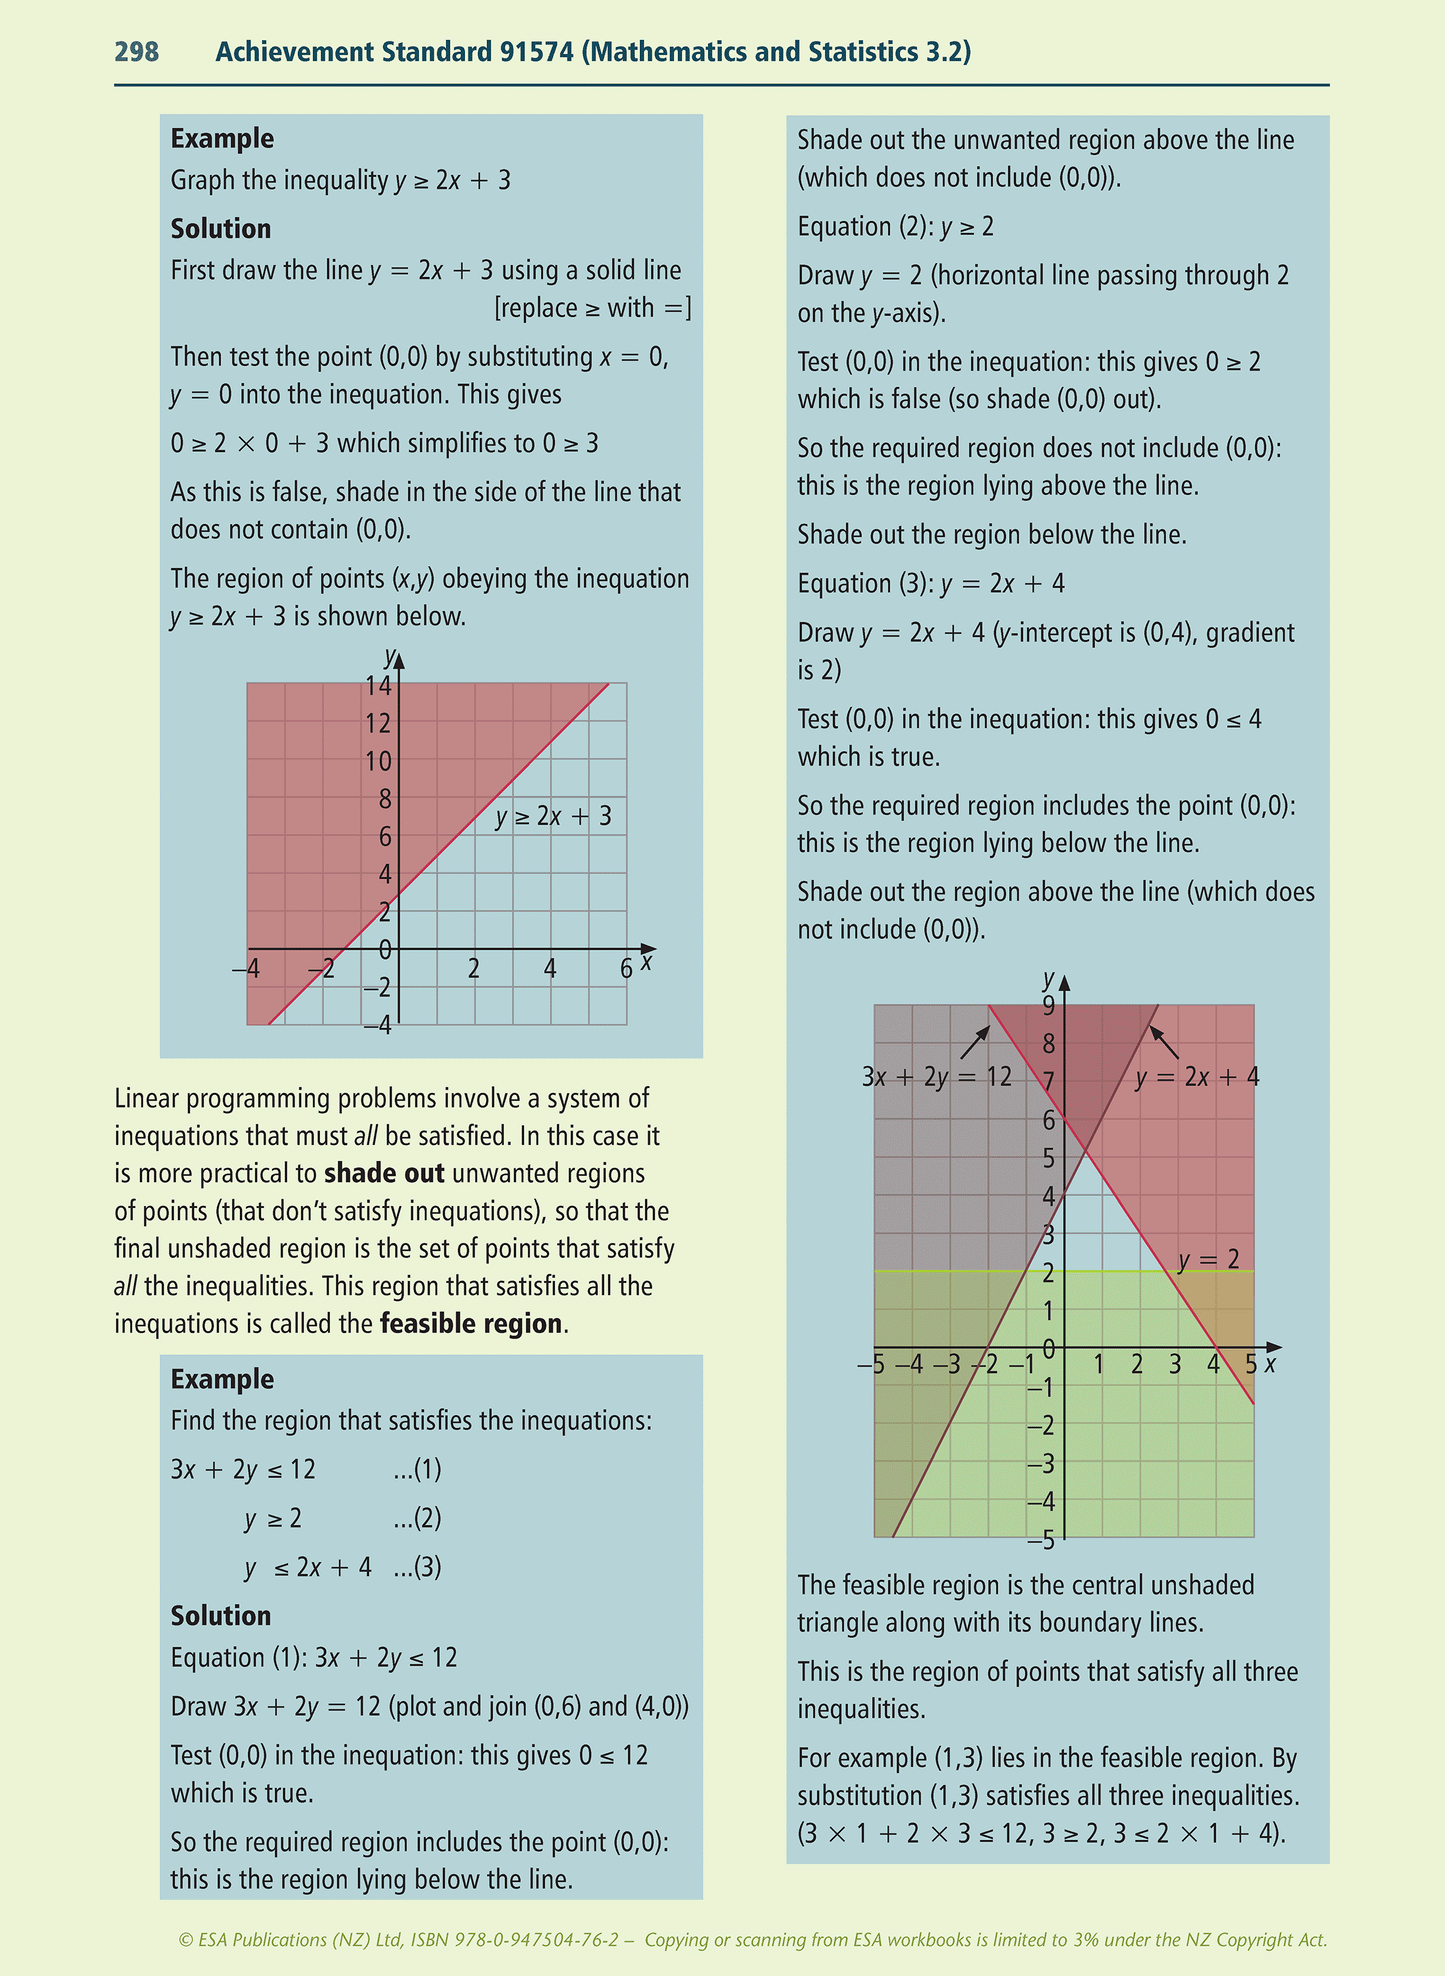 Level 3 Statistics Learning Workbook